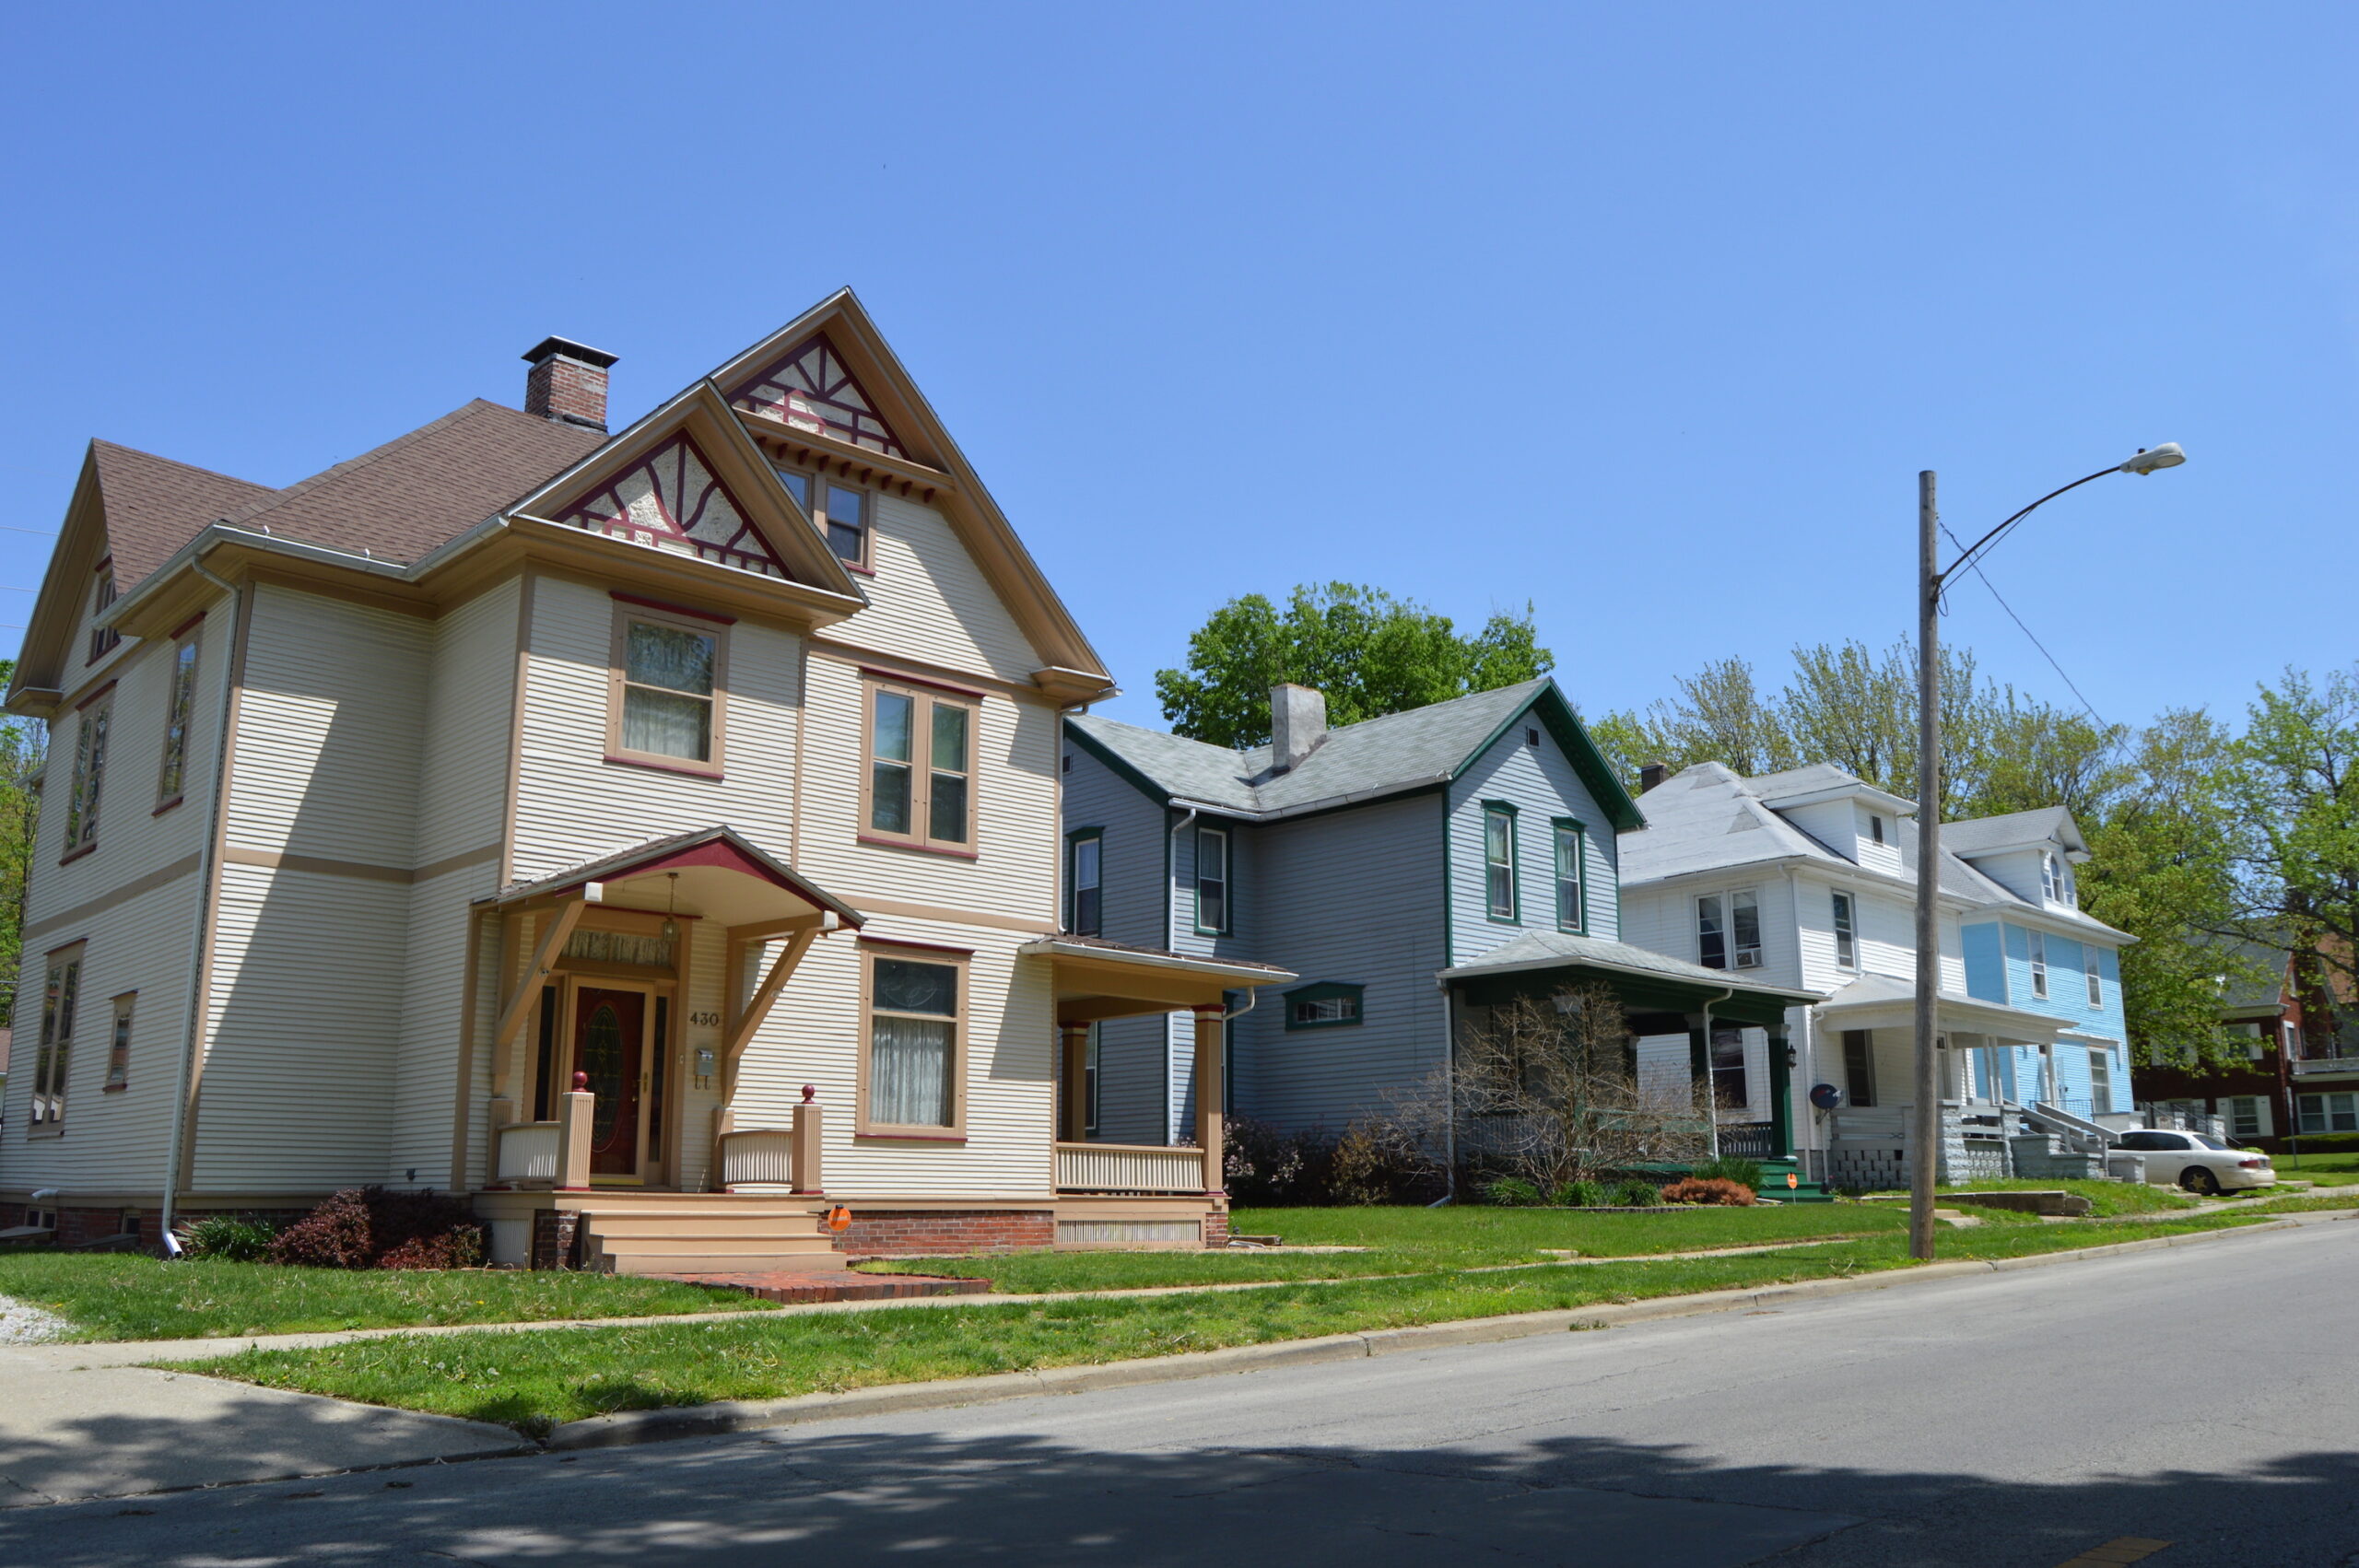 historic houses in Decatur Illinois